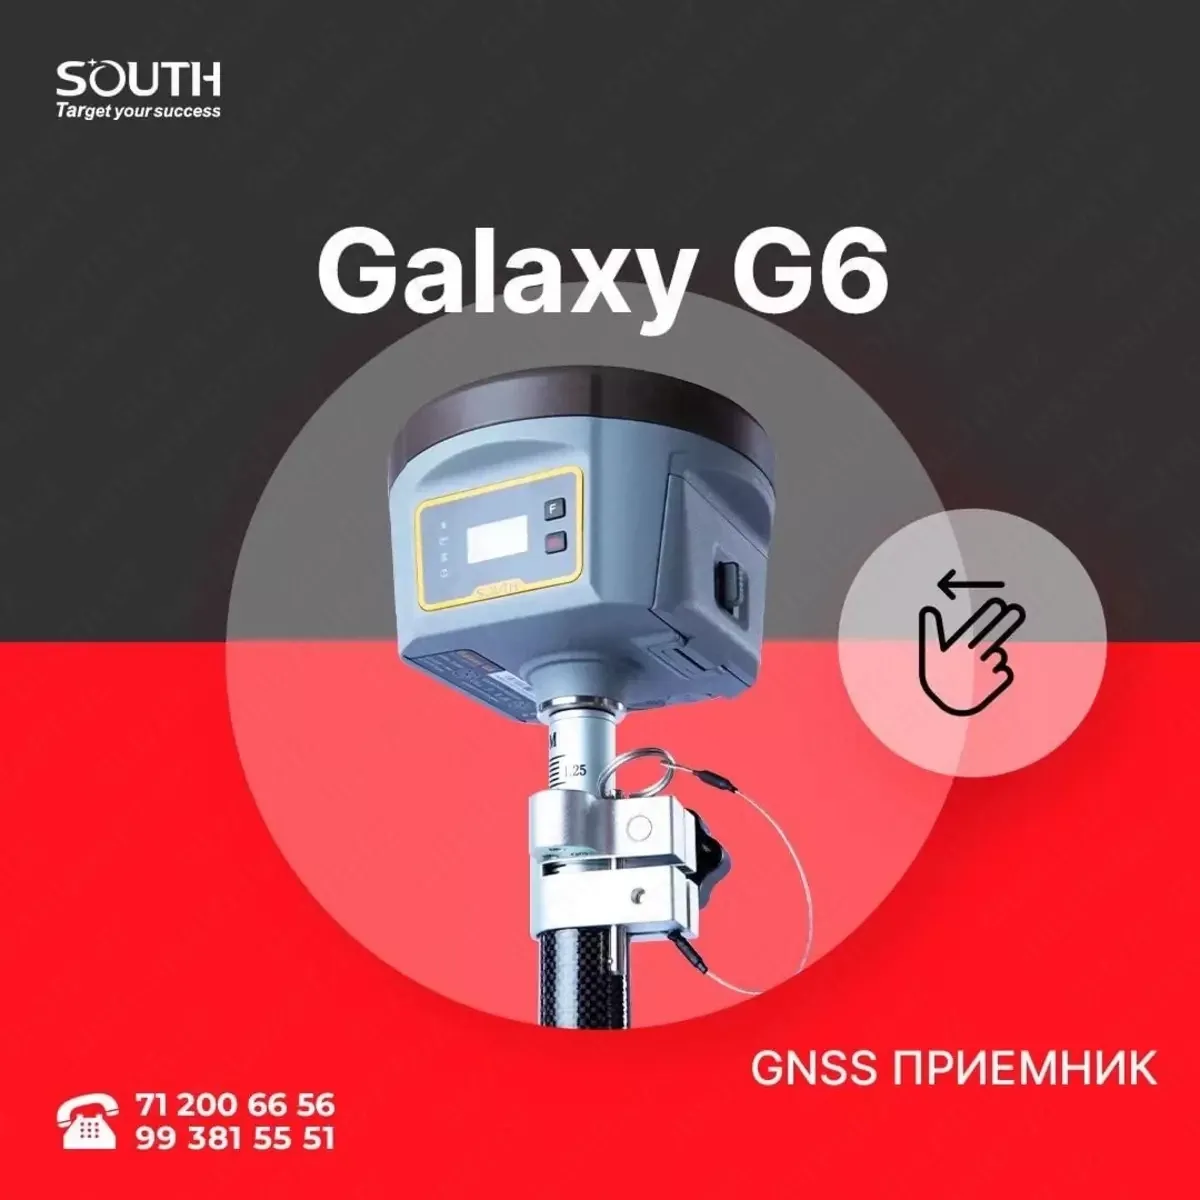 GNSS приемник SOUTH GALAXY G6#2